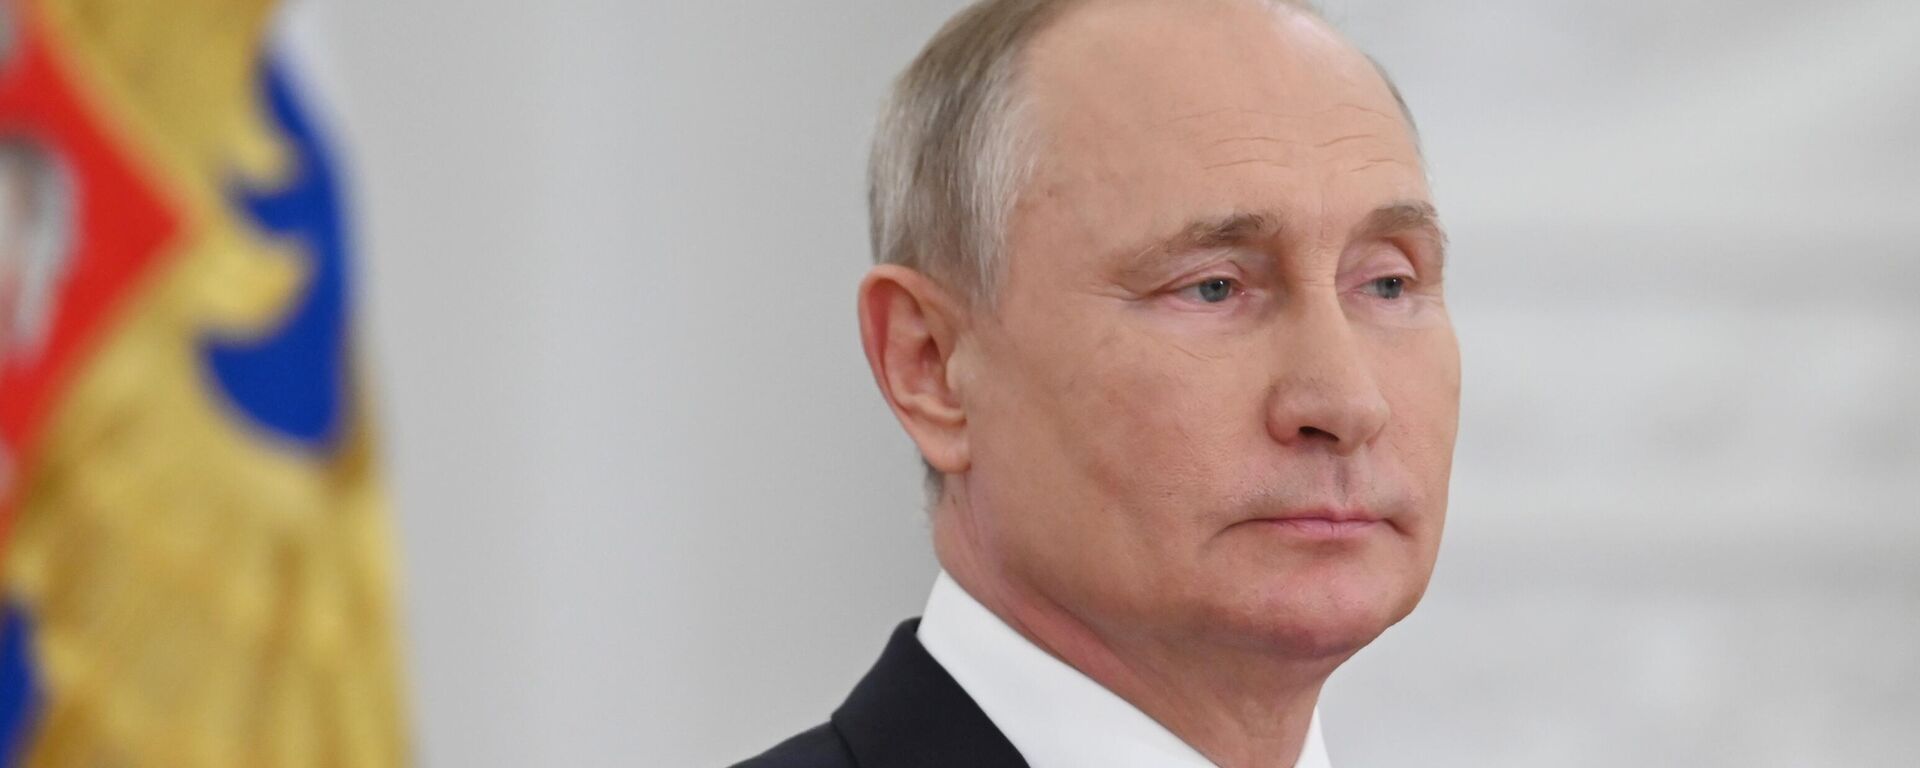 Vladímir Putin, presidente de Rusia - Sputnik Mundo, 1920, 24.08.2021